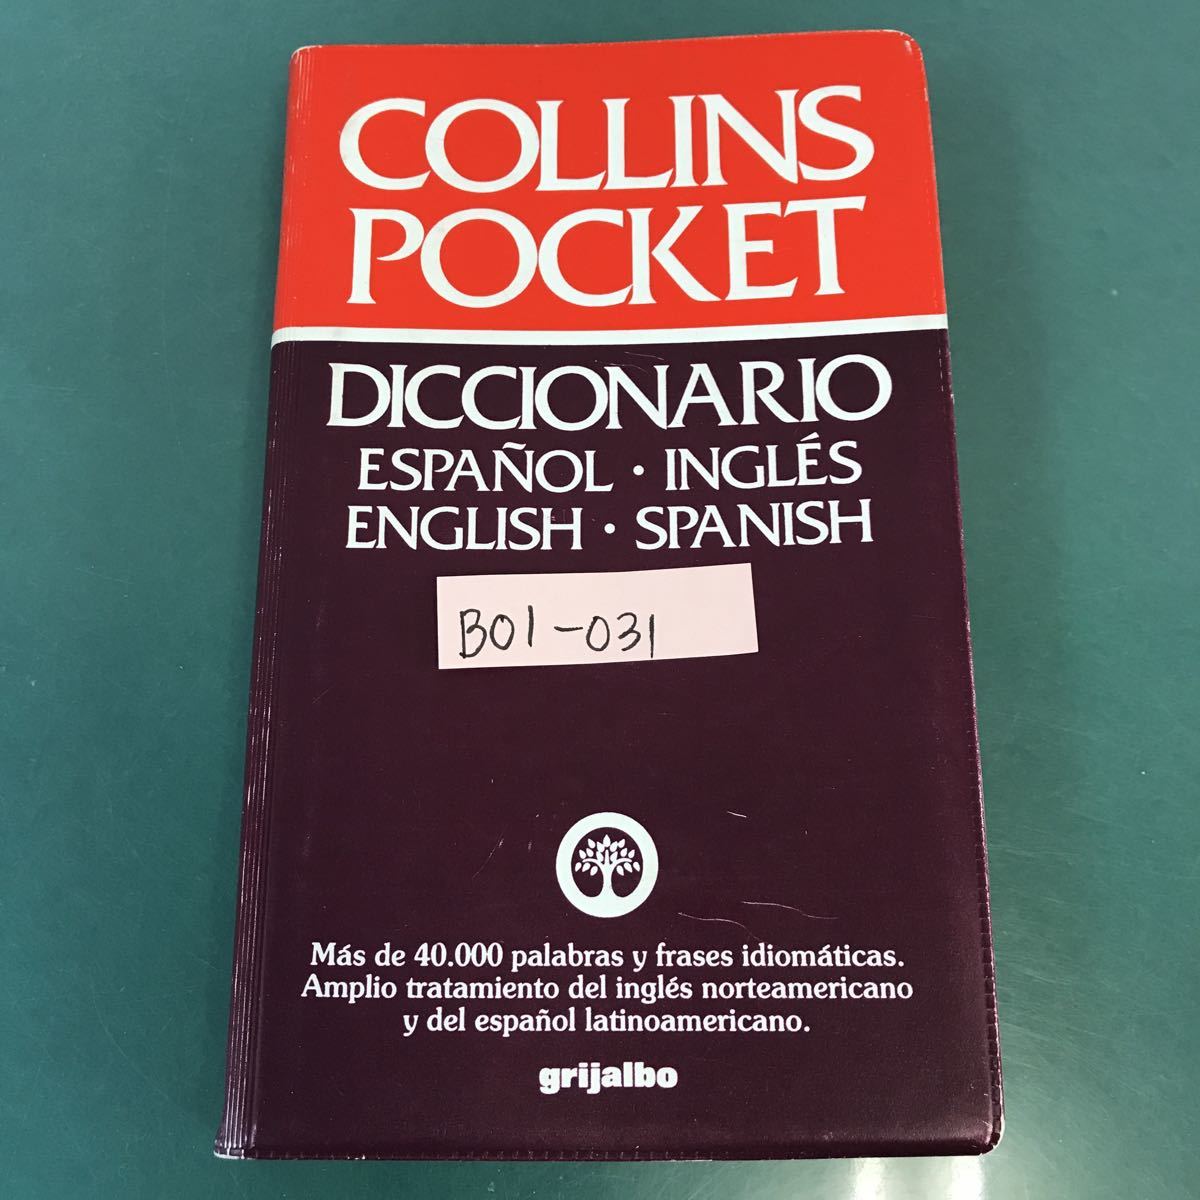 B01-031 Collins Pocket Diccionario Espanol / Ingles English / Испанский Grijaibo